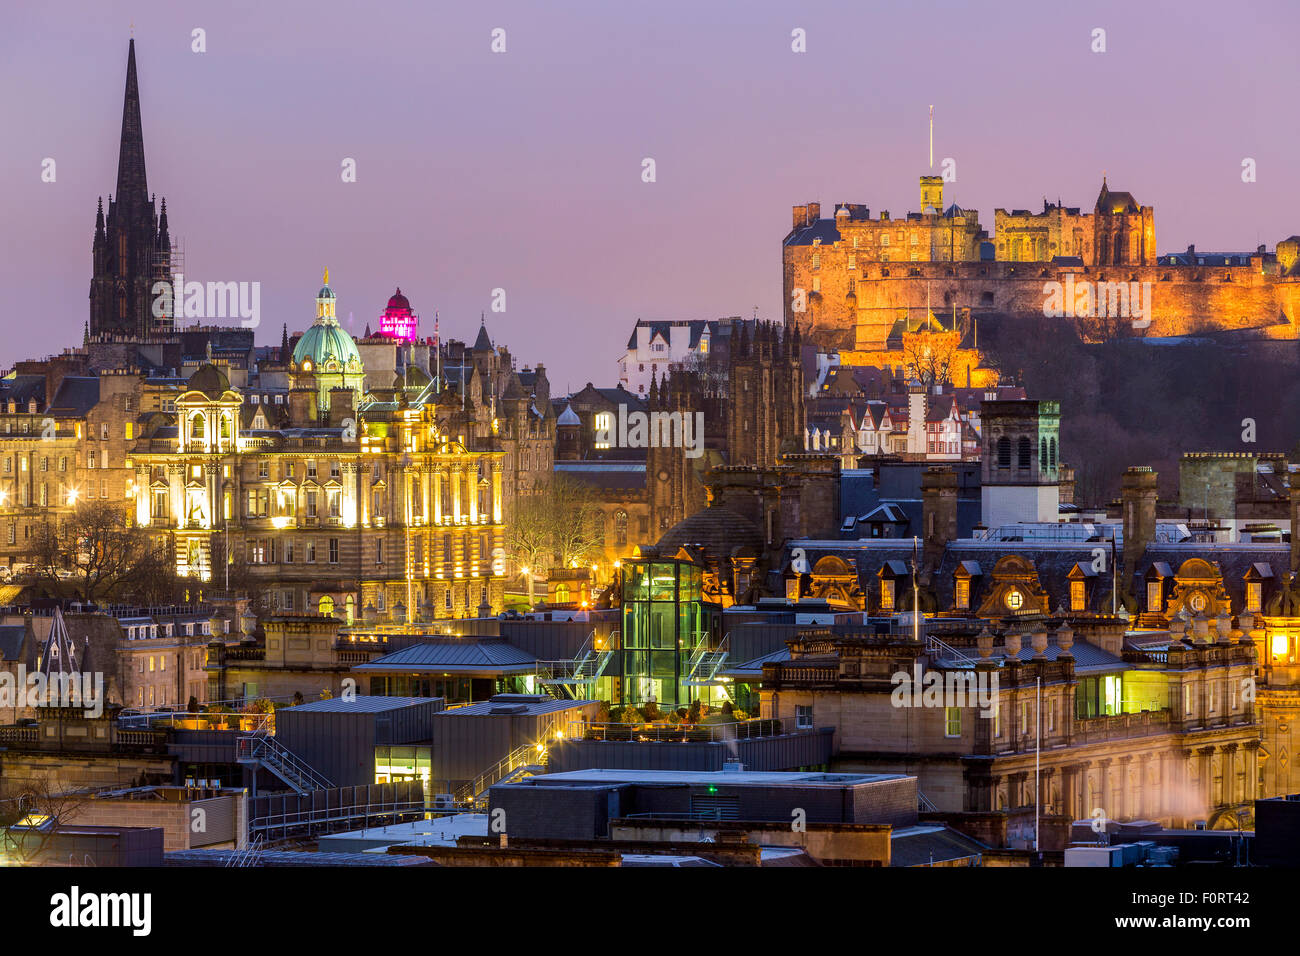 A view from Calton Hill over Edinburgh, City of Edinburgh, Scotland, United Kingdom, Europe. Stock Photo